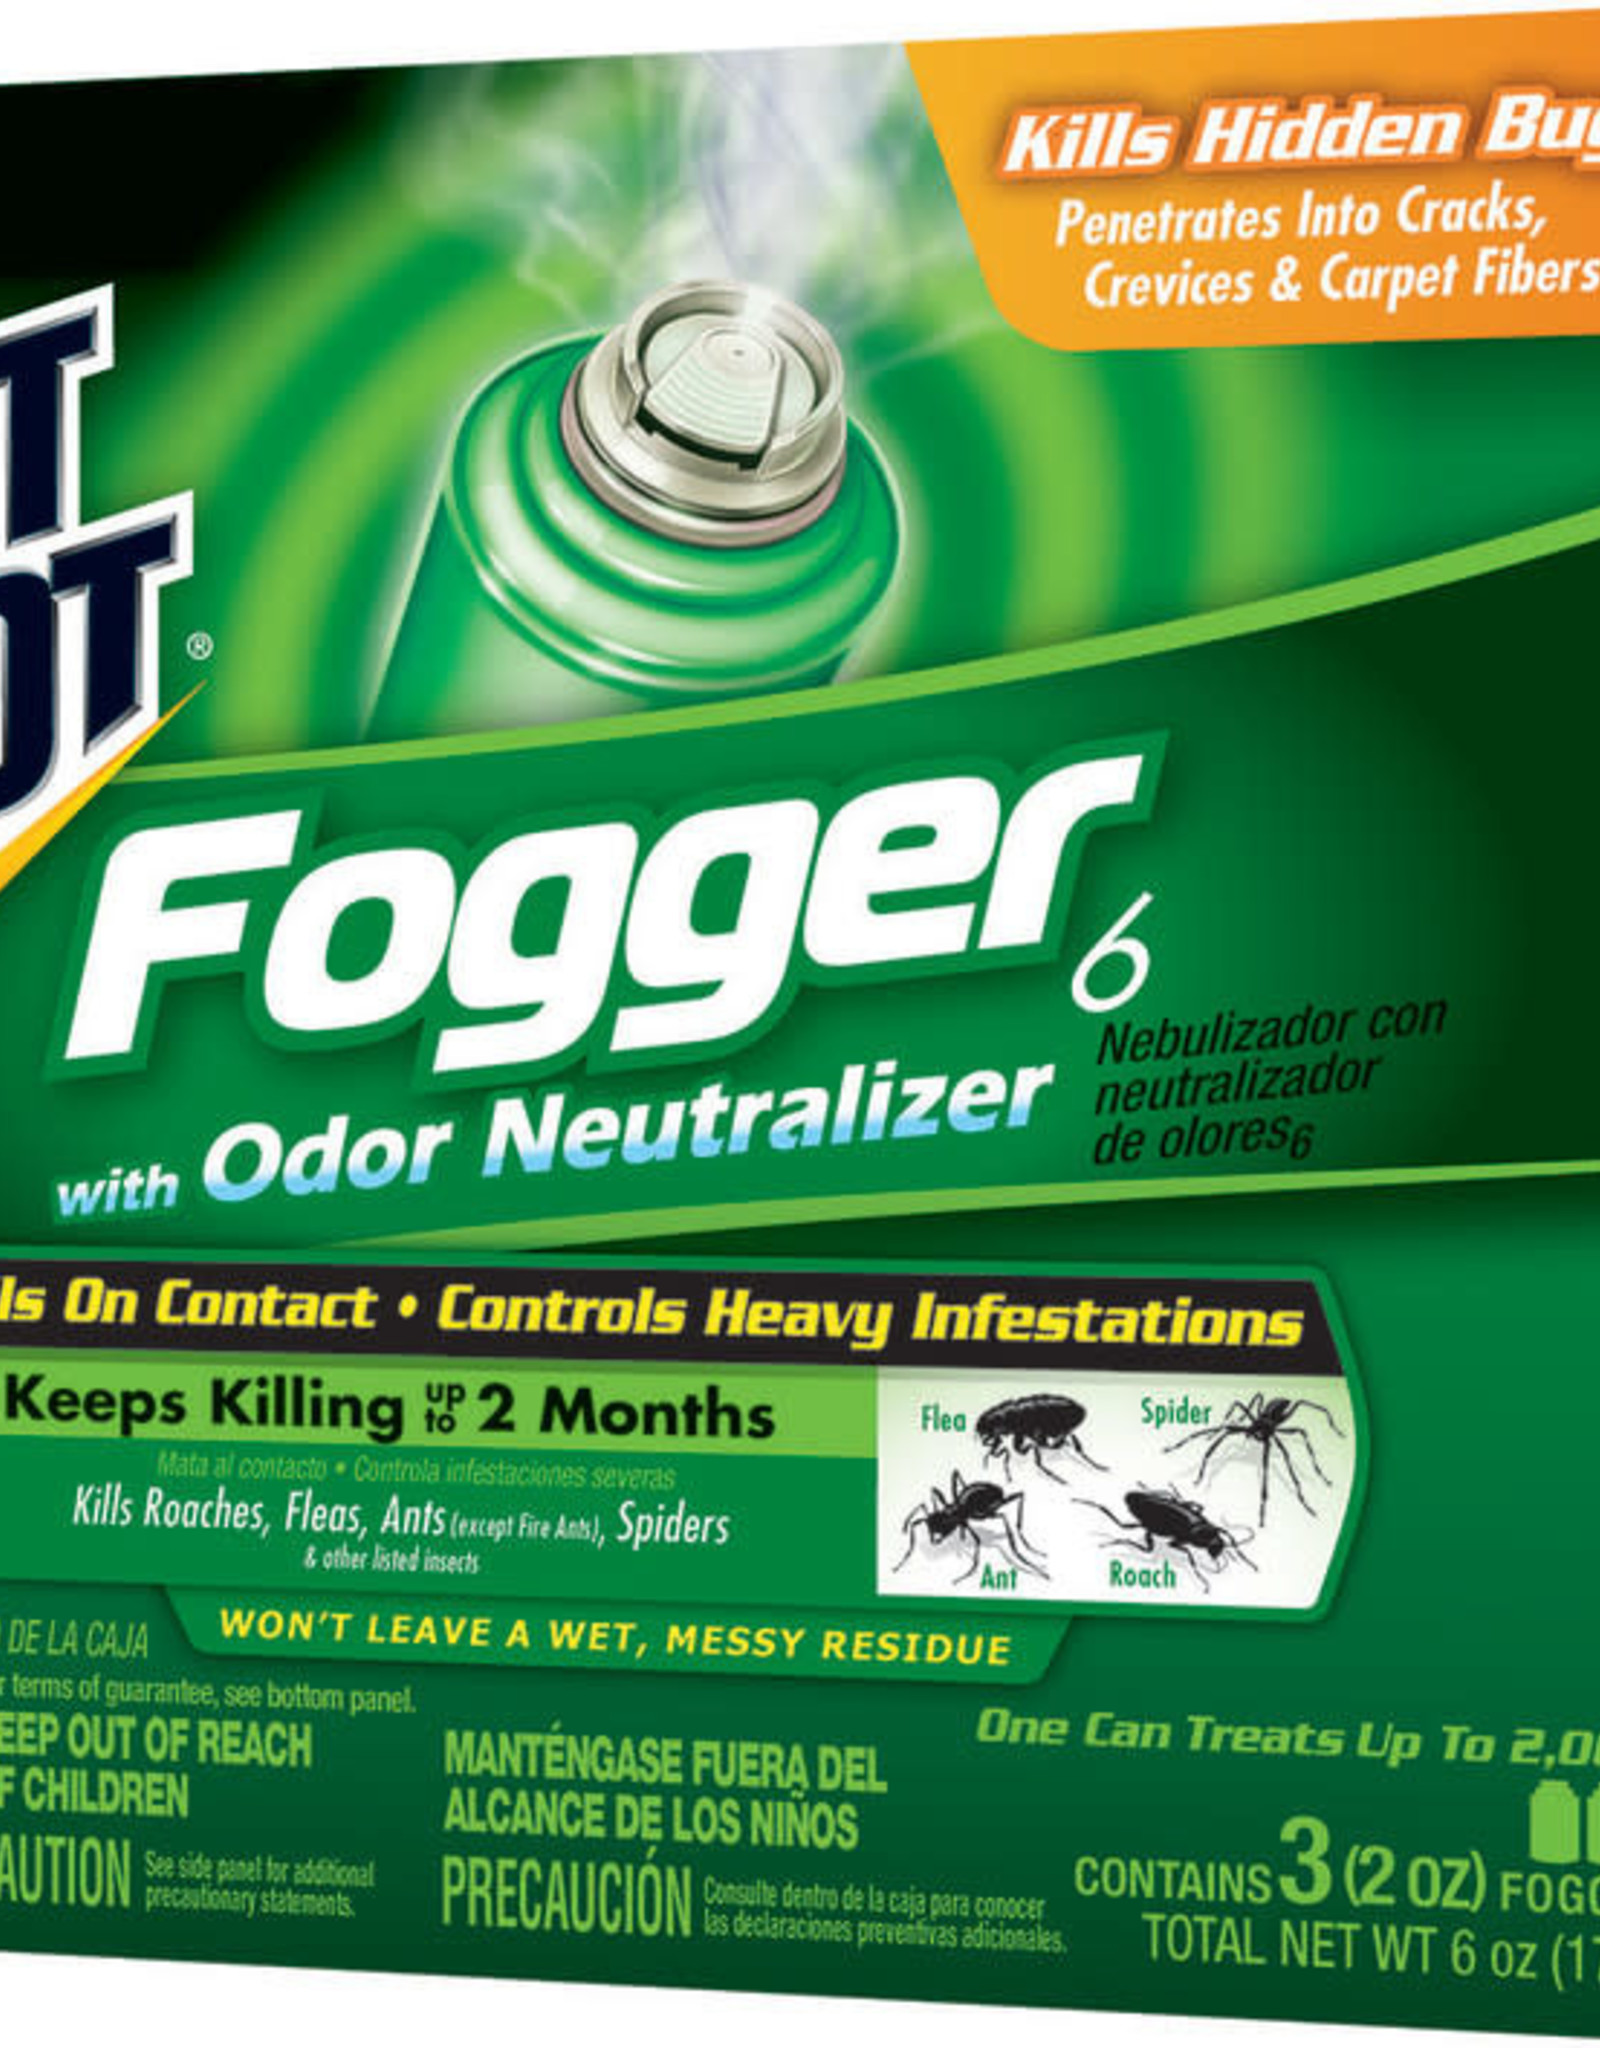 Hot Shot Fogger6 with Odor Neutralizer Indoor 3pk 2 oz